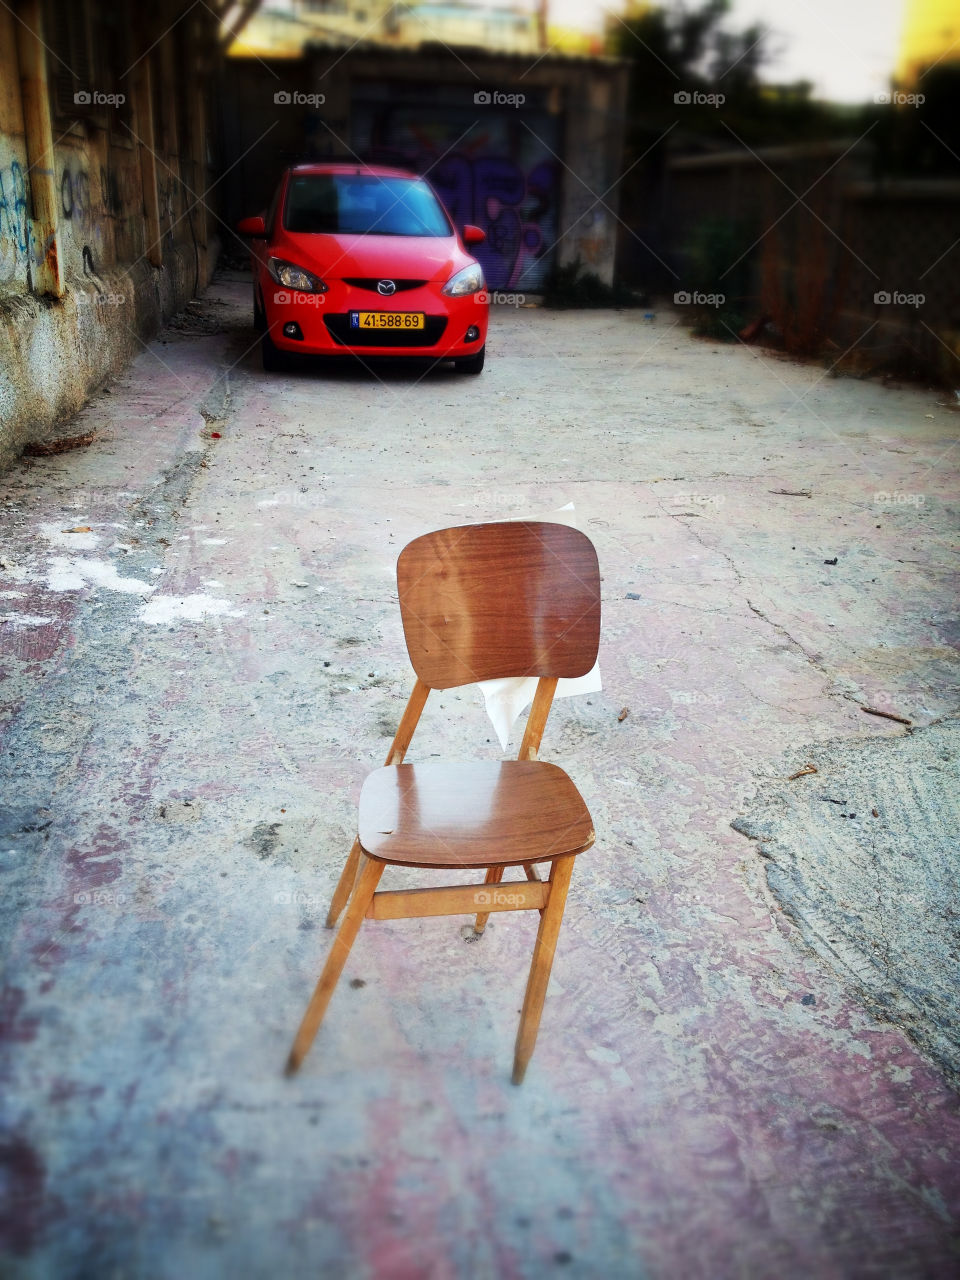 car chair tel aviv by ktf